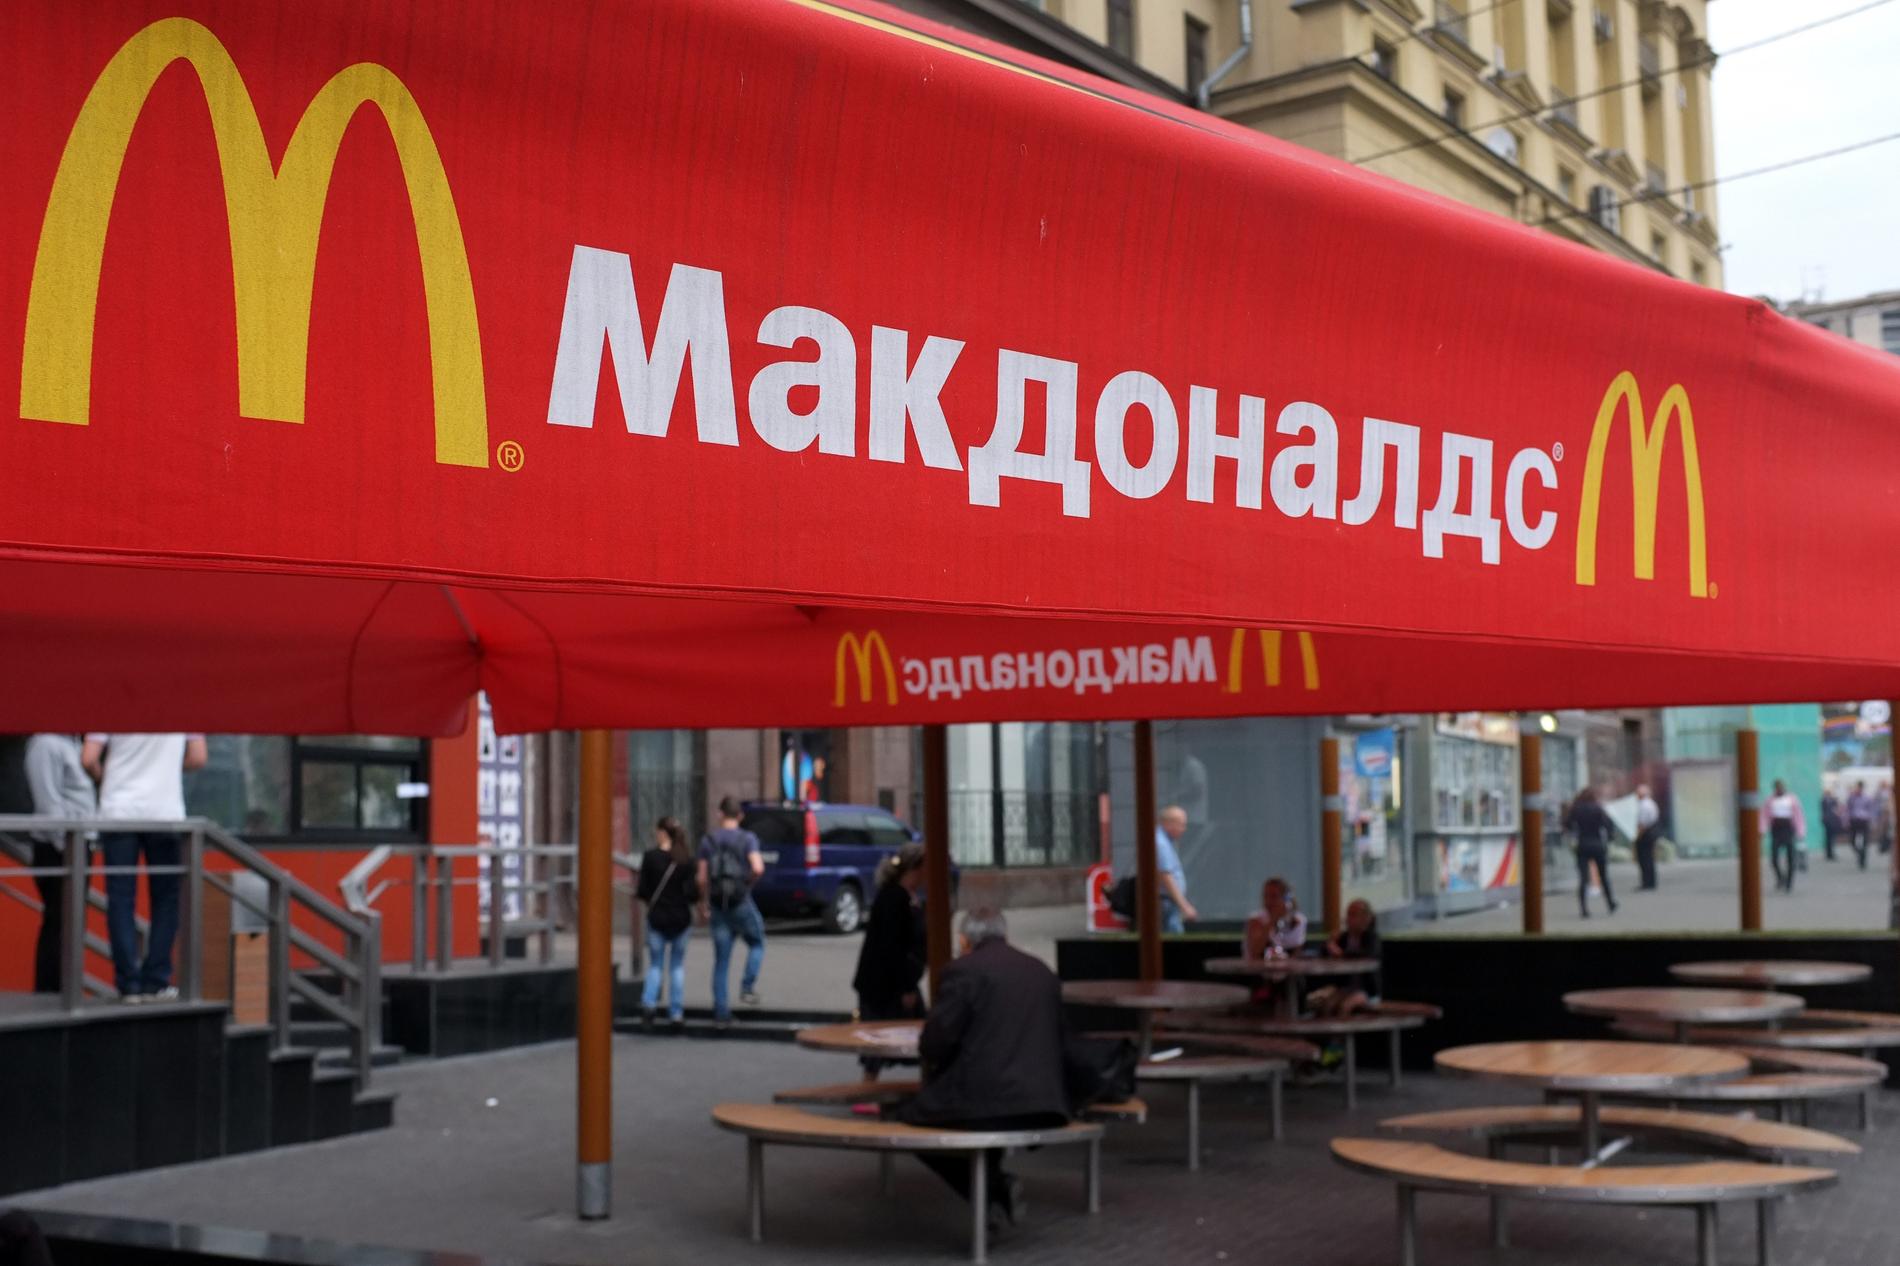 McDonalds har solgt seg ut av Russland